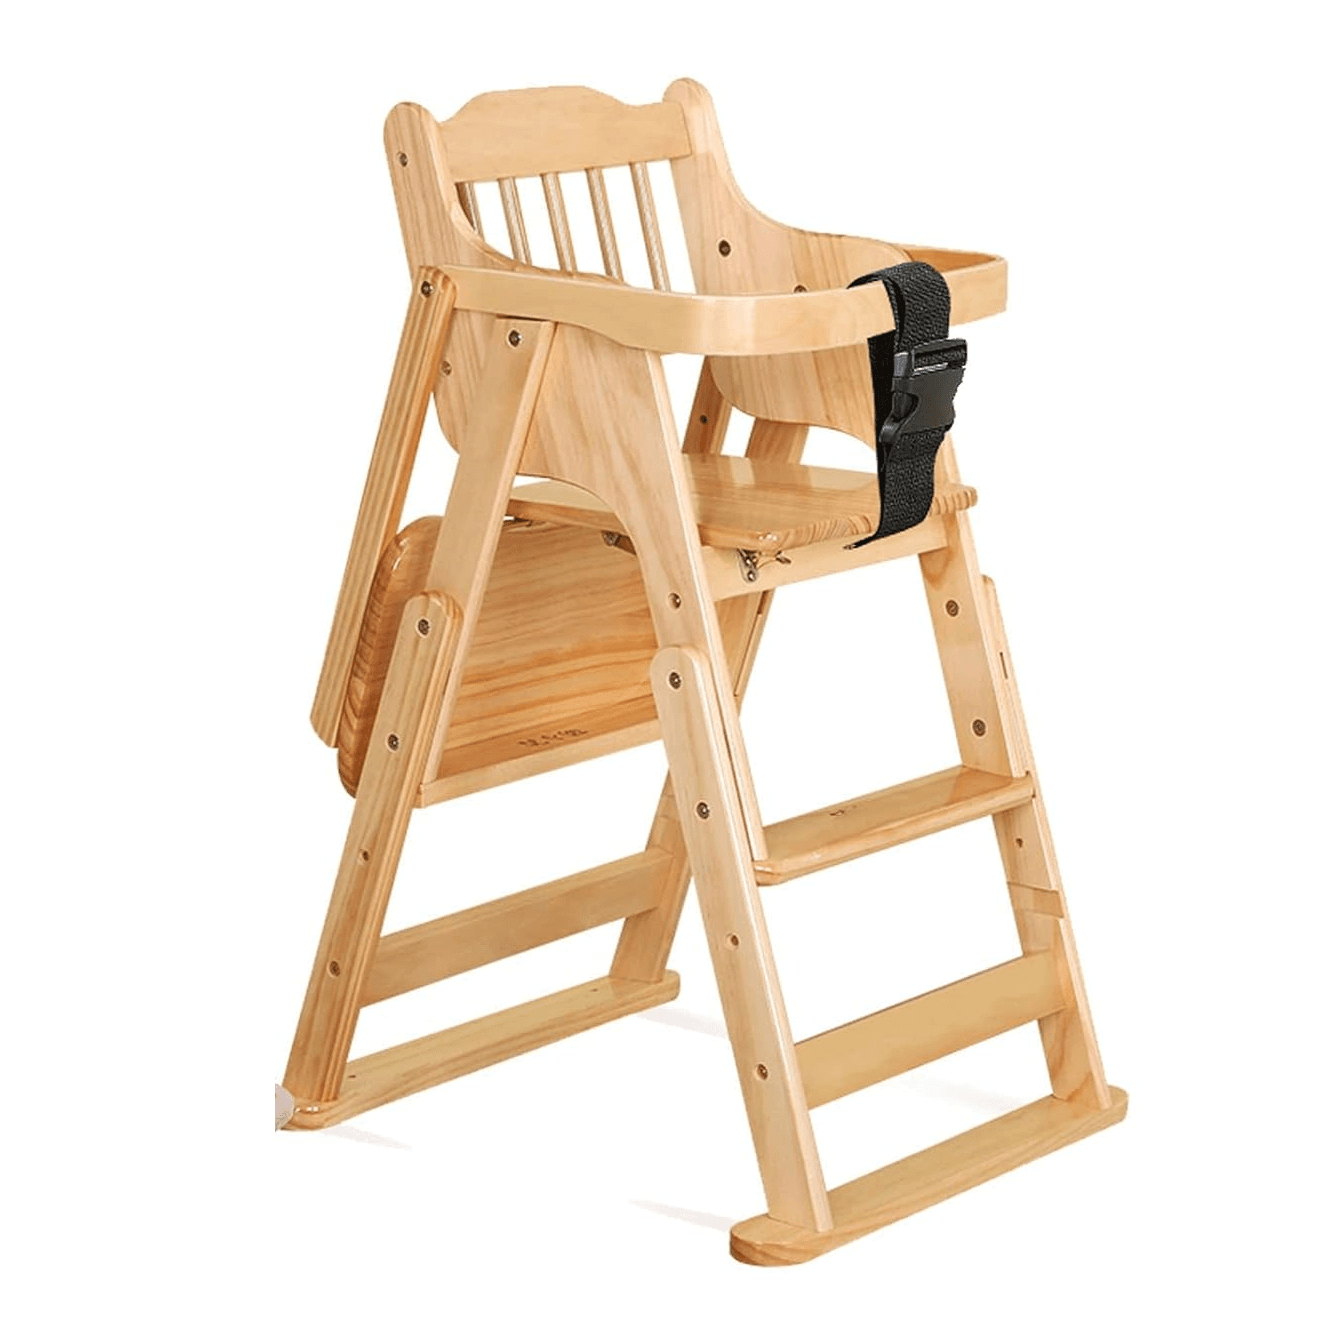 Montessori high chair